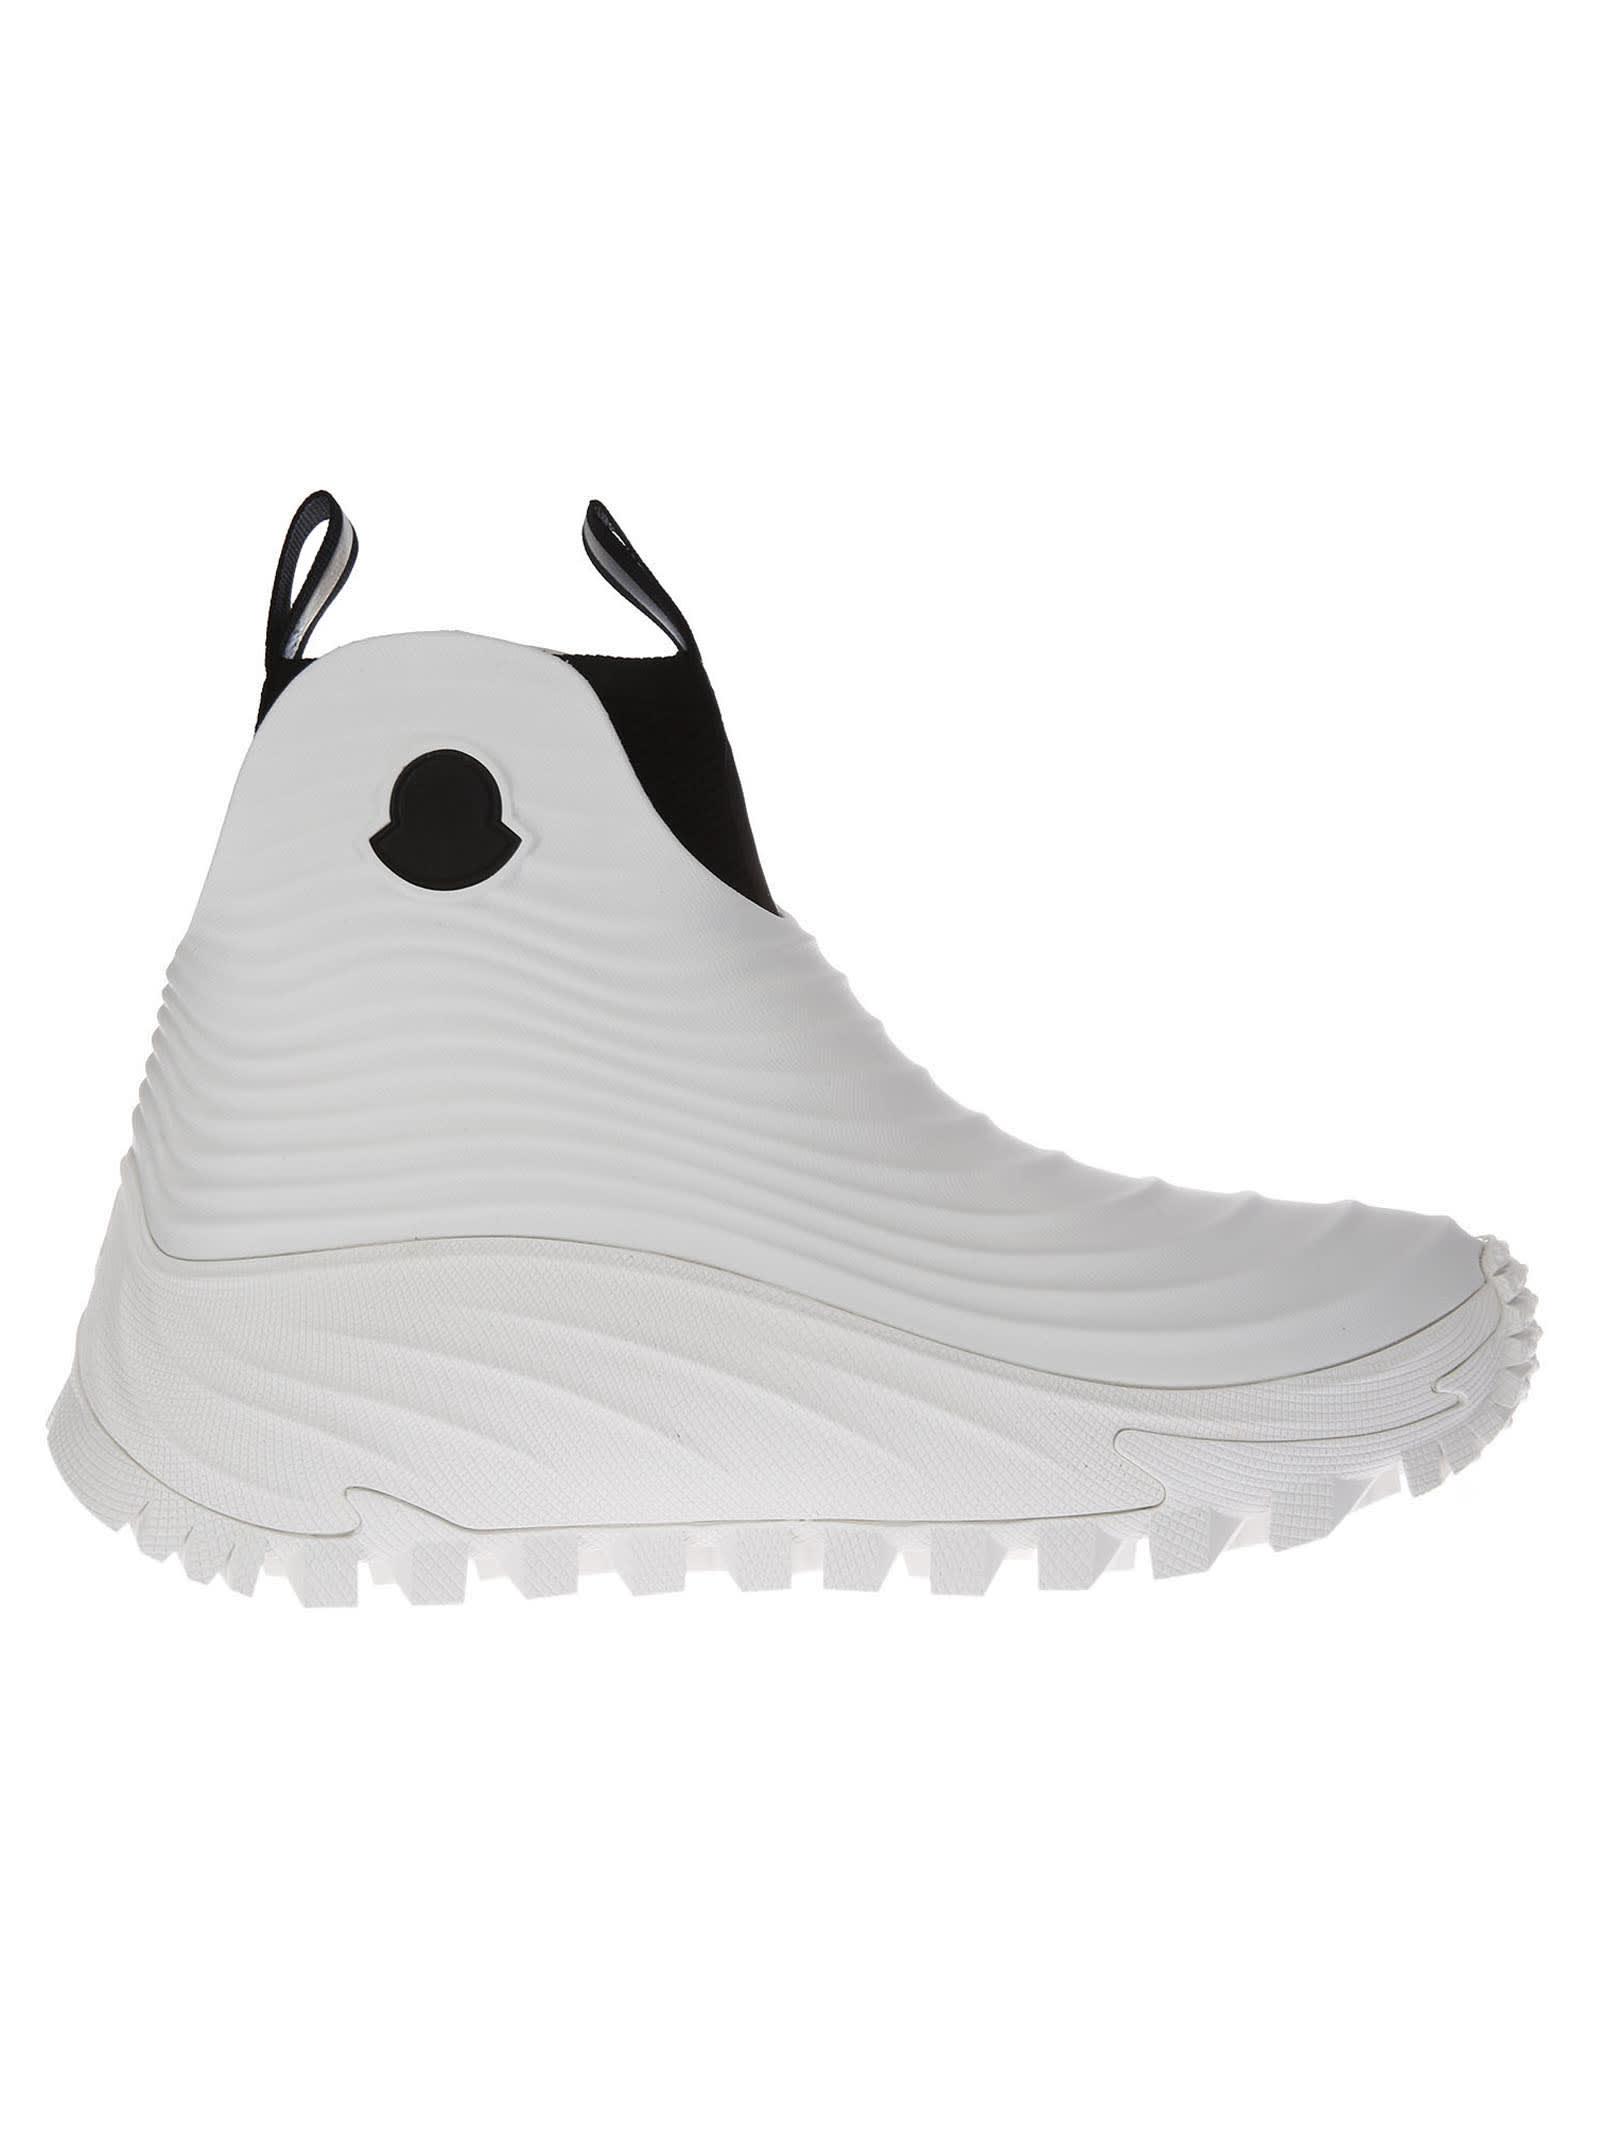 Moncler Genius Acqua High Rain Boots in White | Lyst